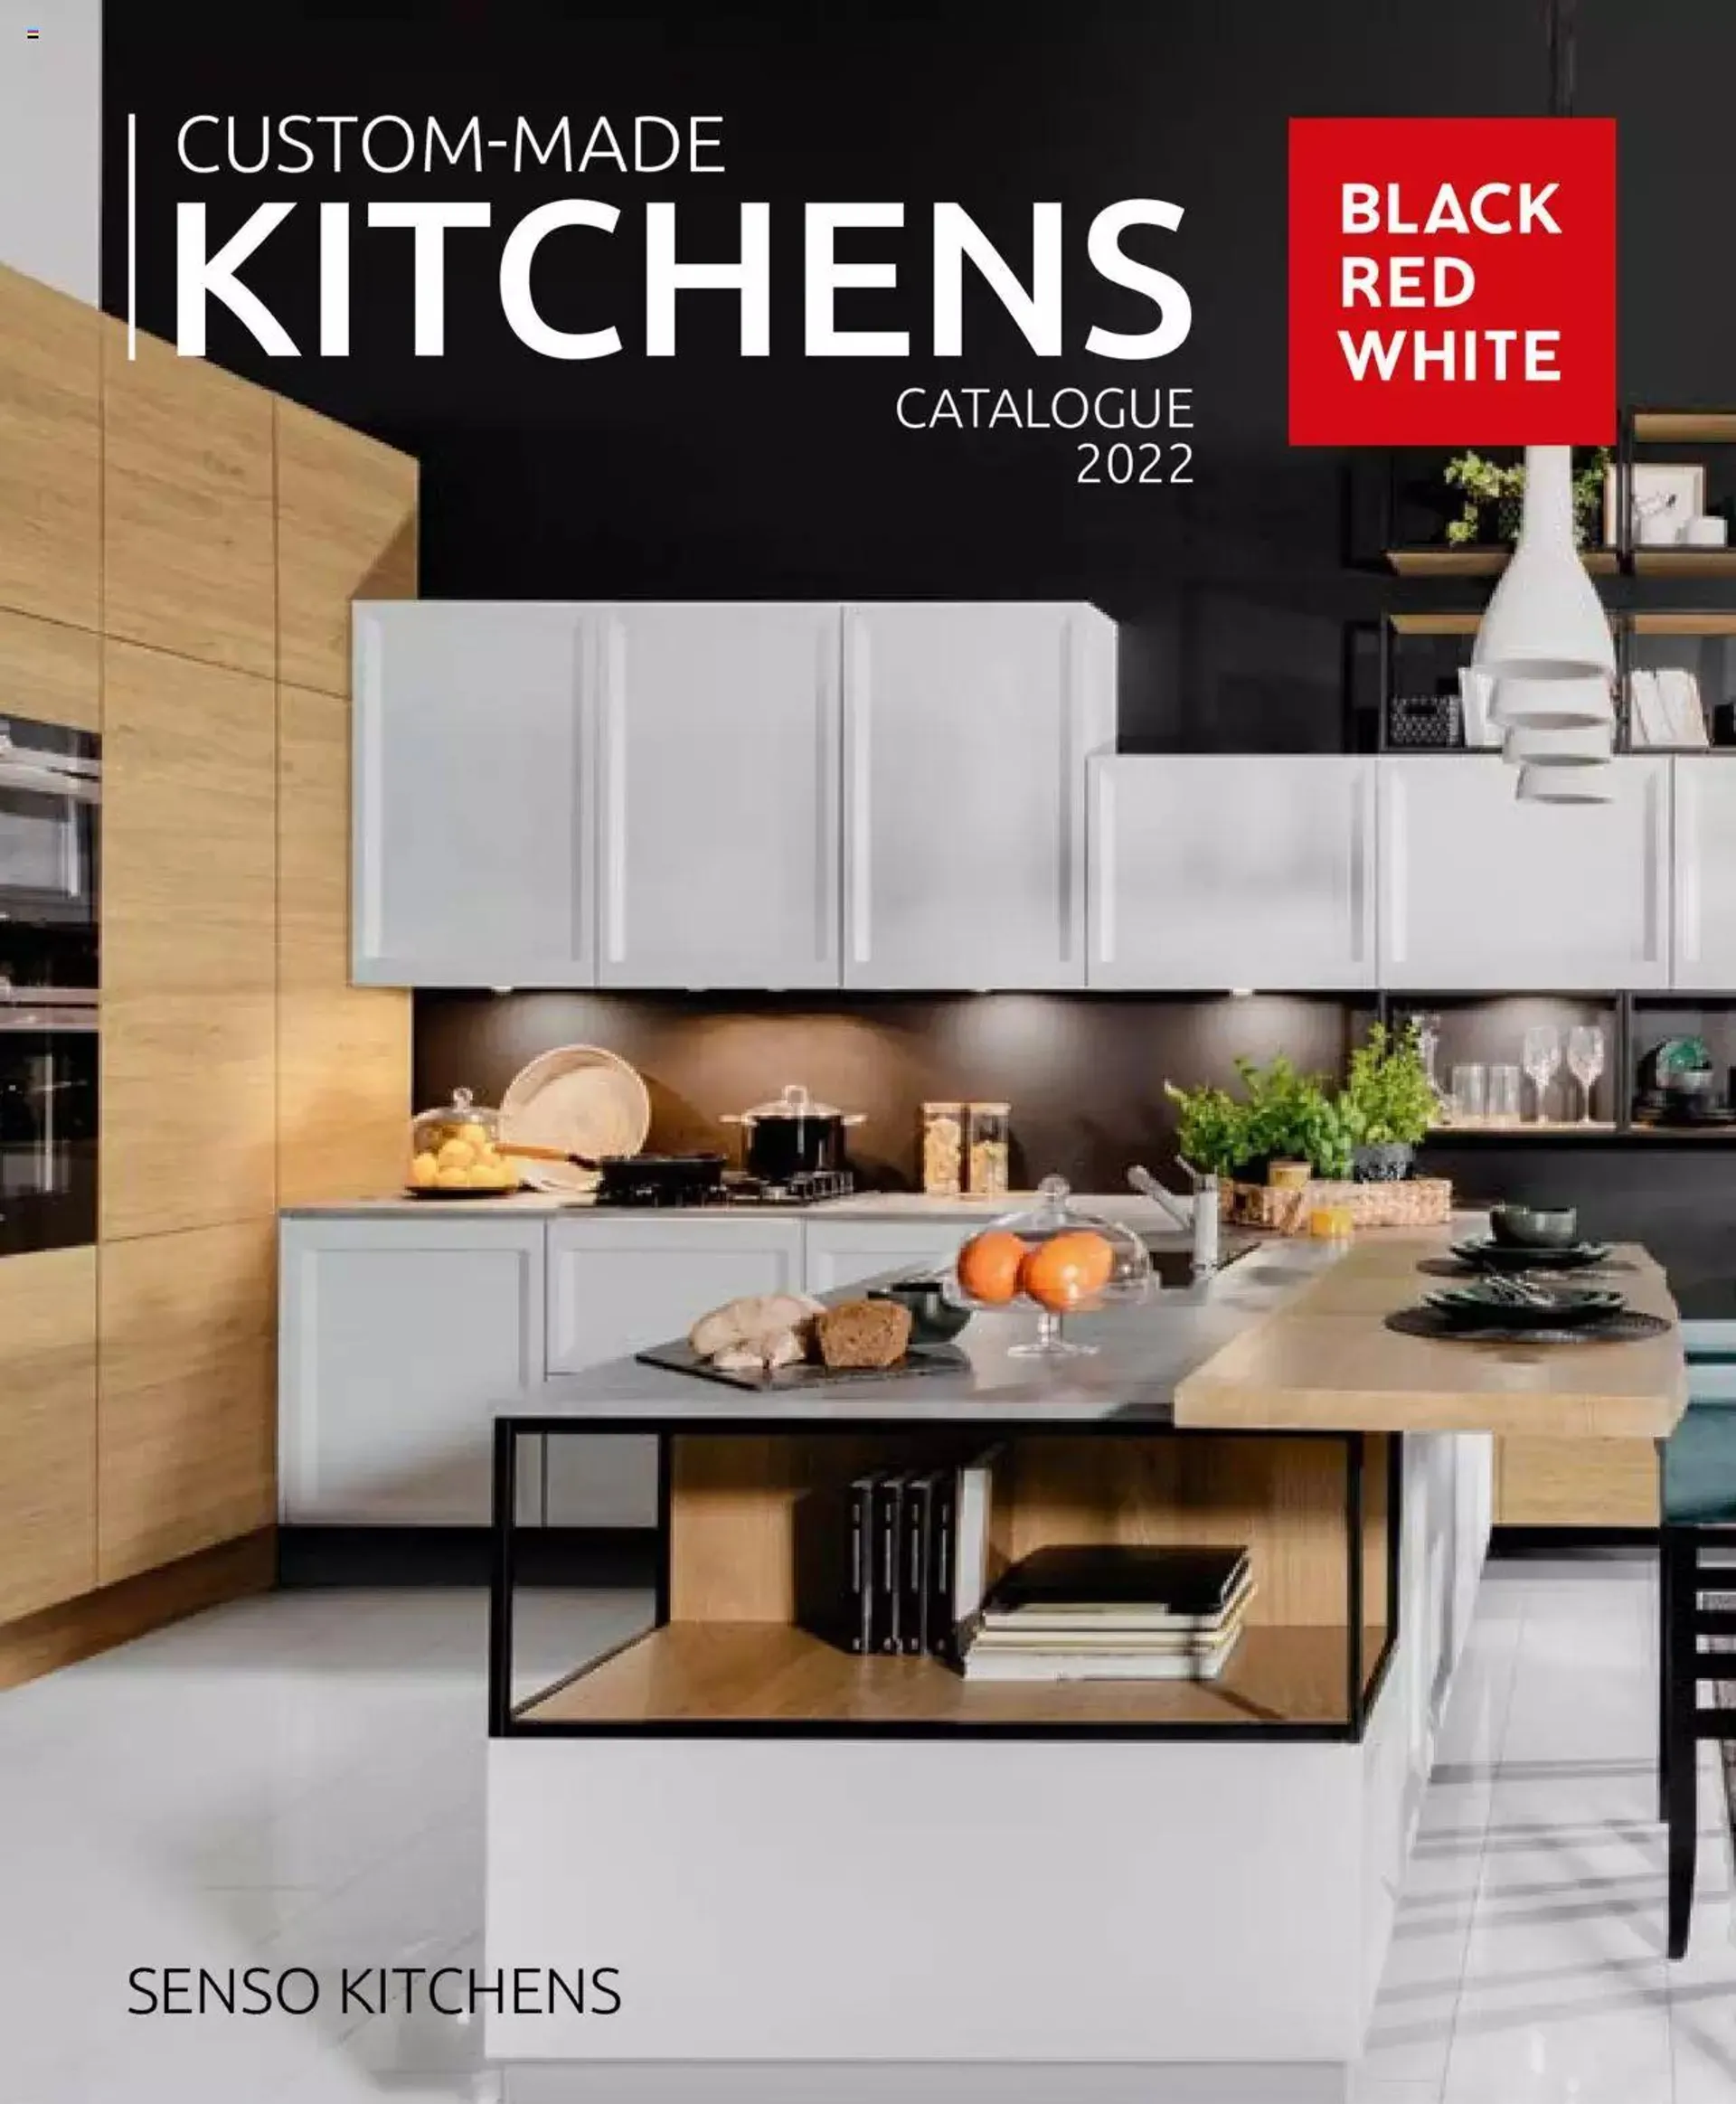 Black Red White - Custom-made Kitchen Catalogue 2022 - 0